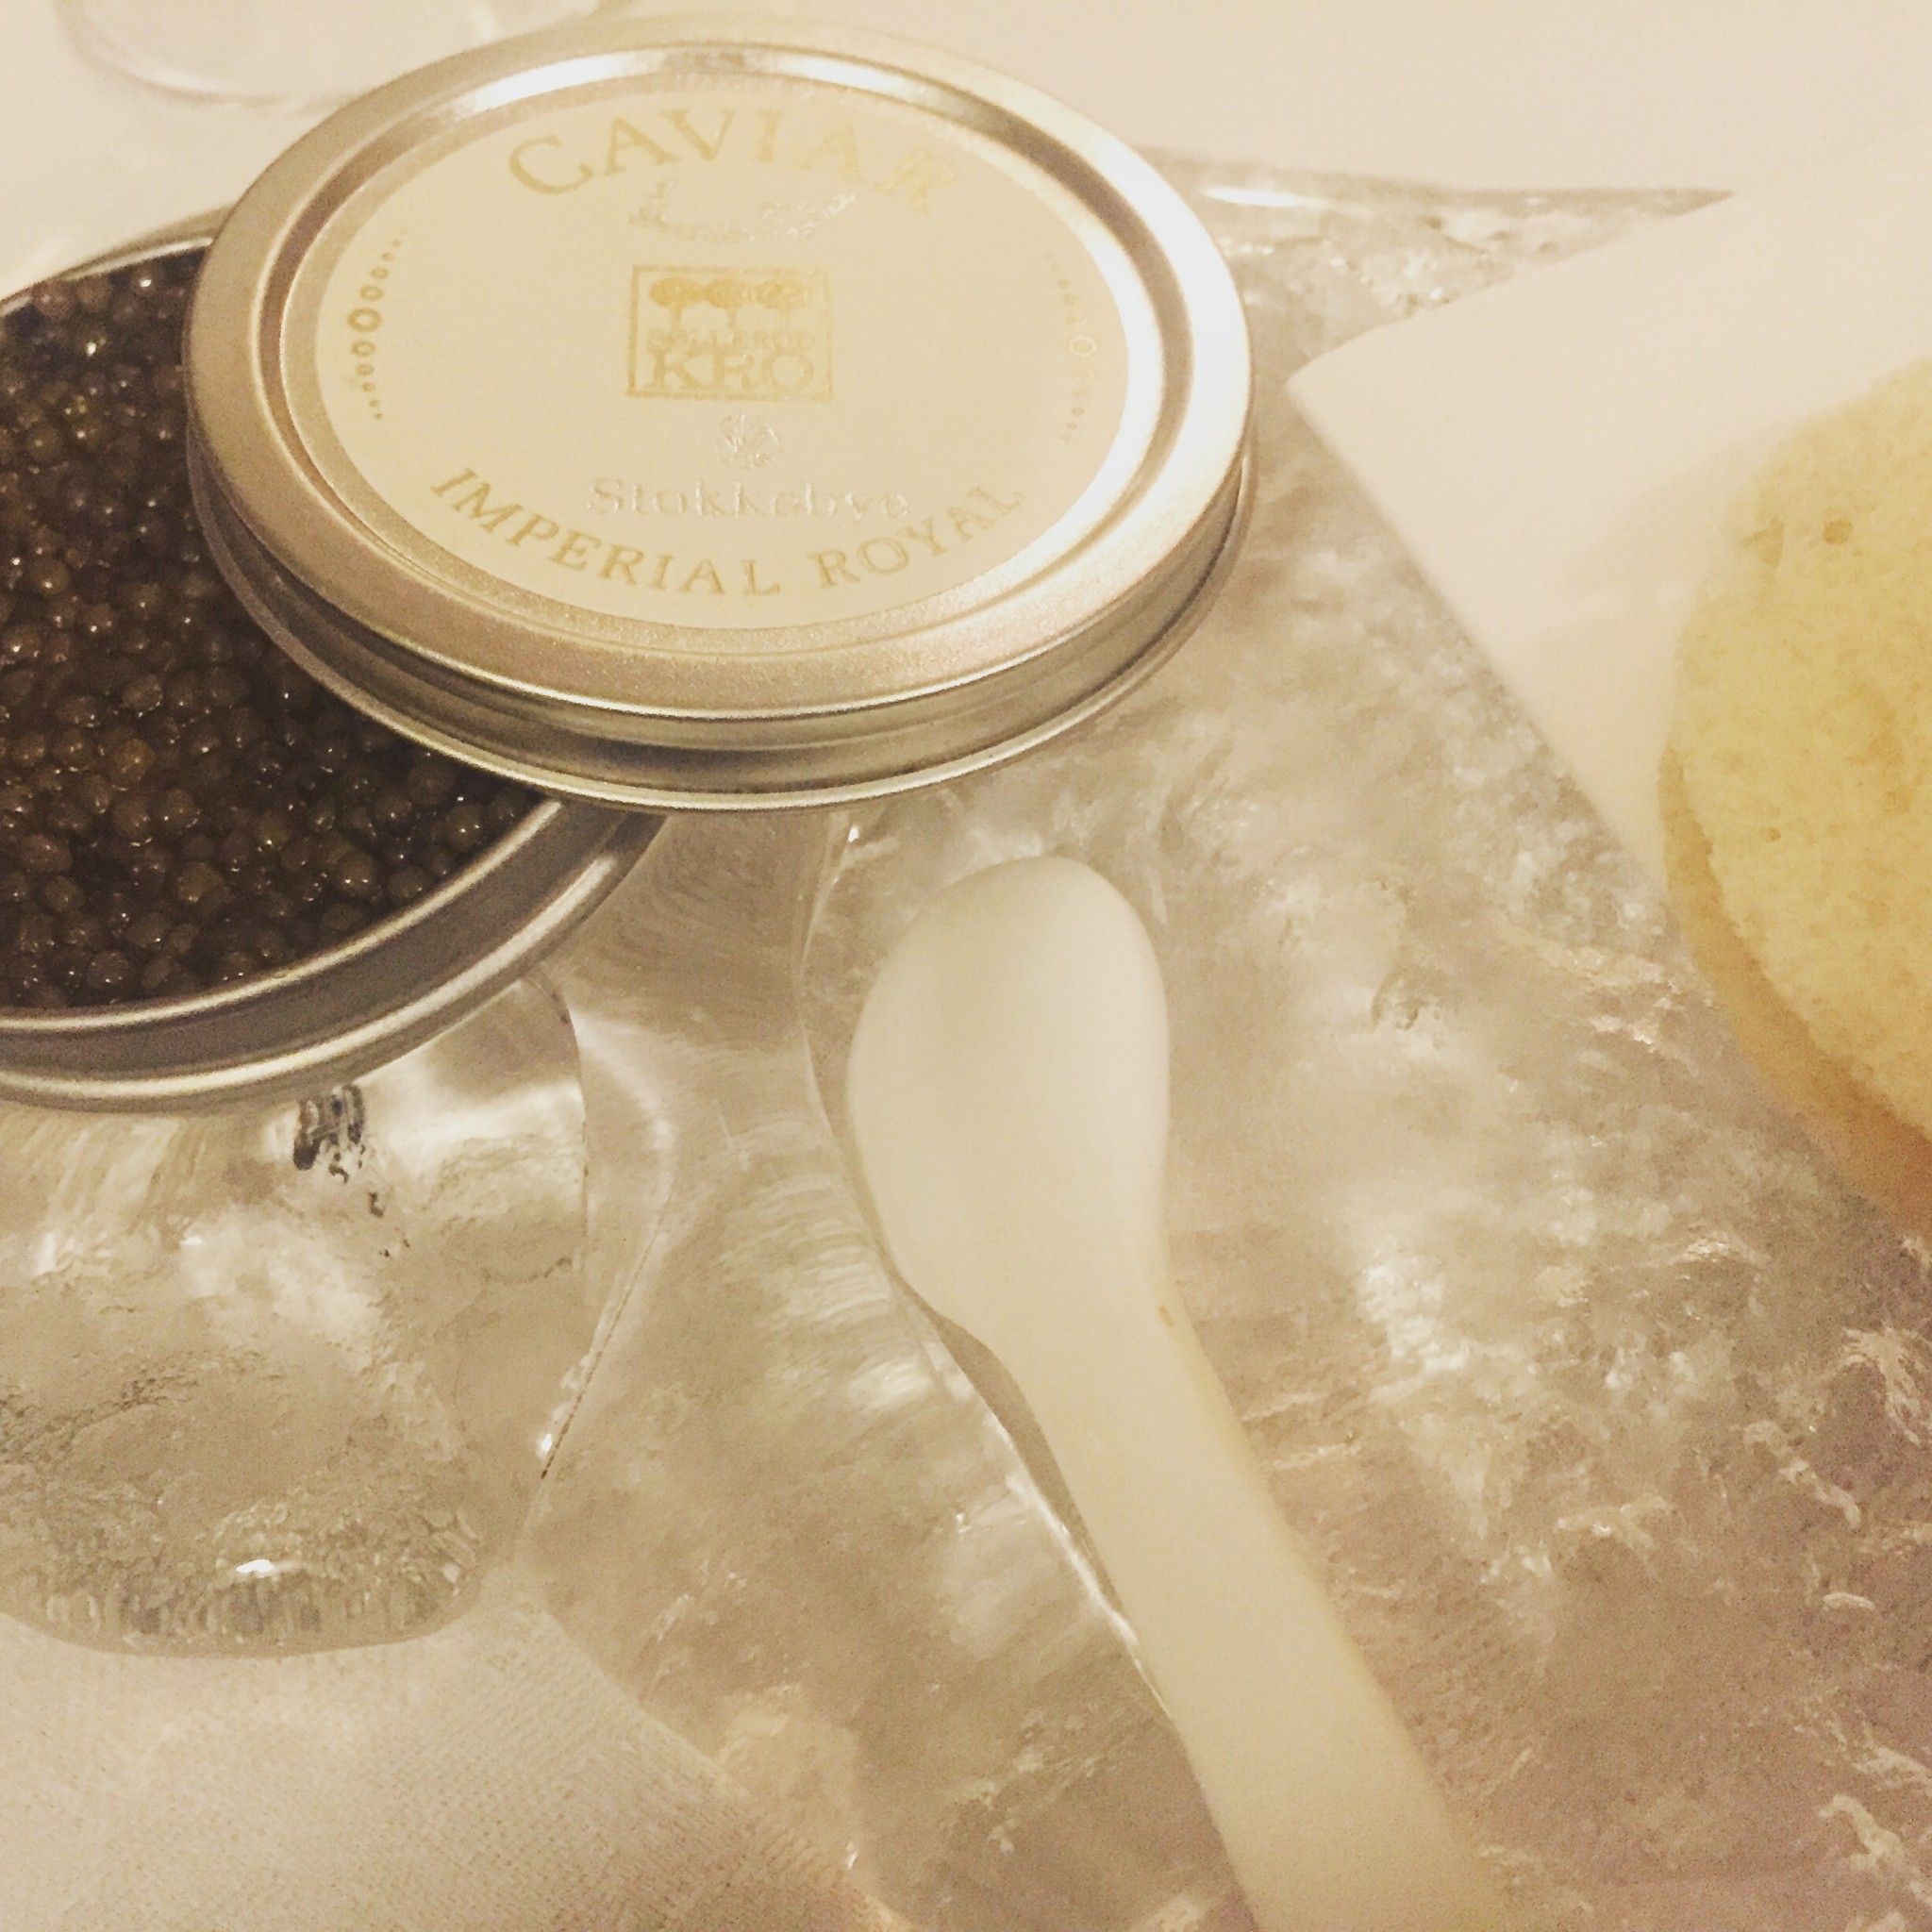 Caviar er ikke det værste, vi har. Slet ikke når det er så godt som her.